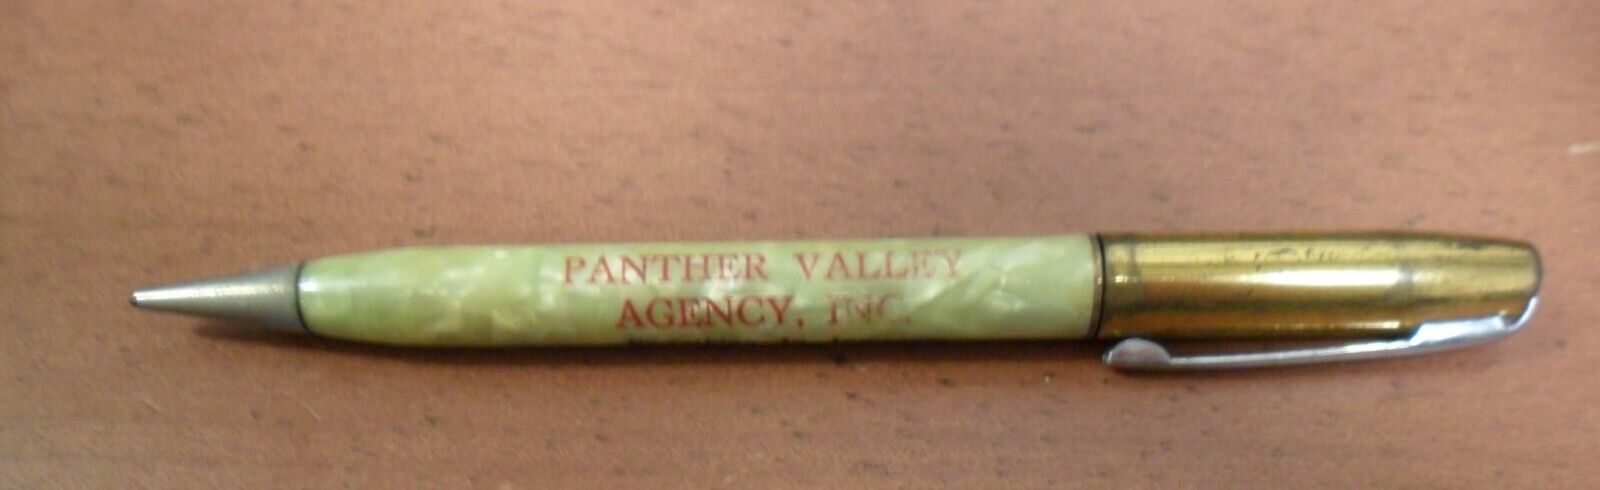 Vintage PANTHER VALLEY AGENCY, INC. Mechanical Pencil, Coaldale, Pennsylvania